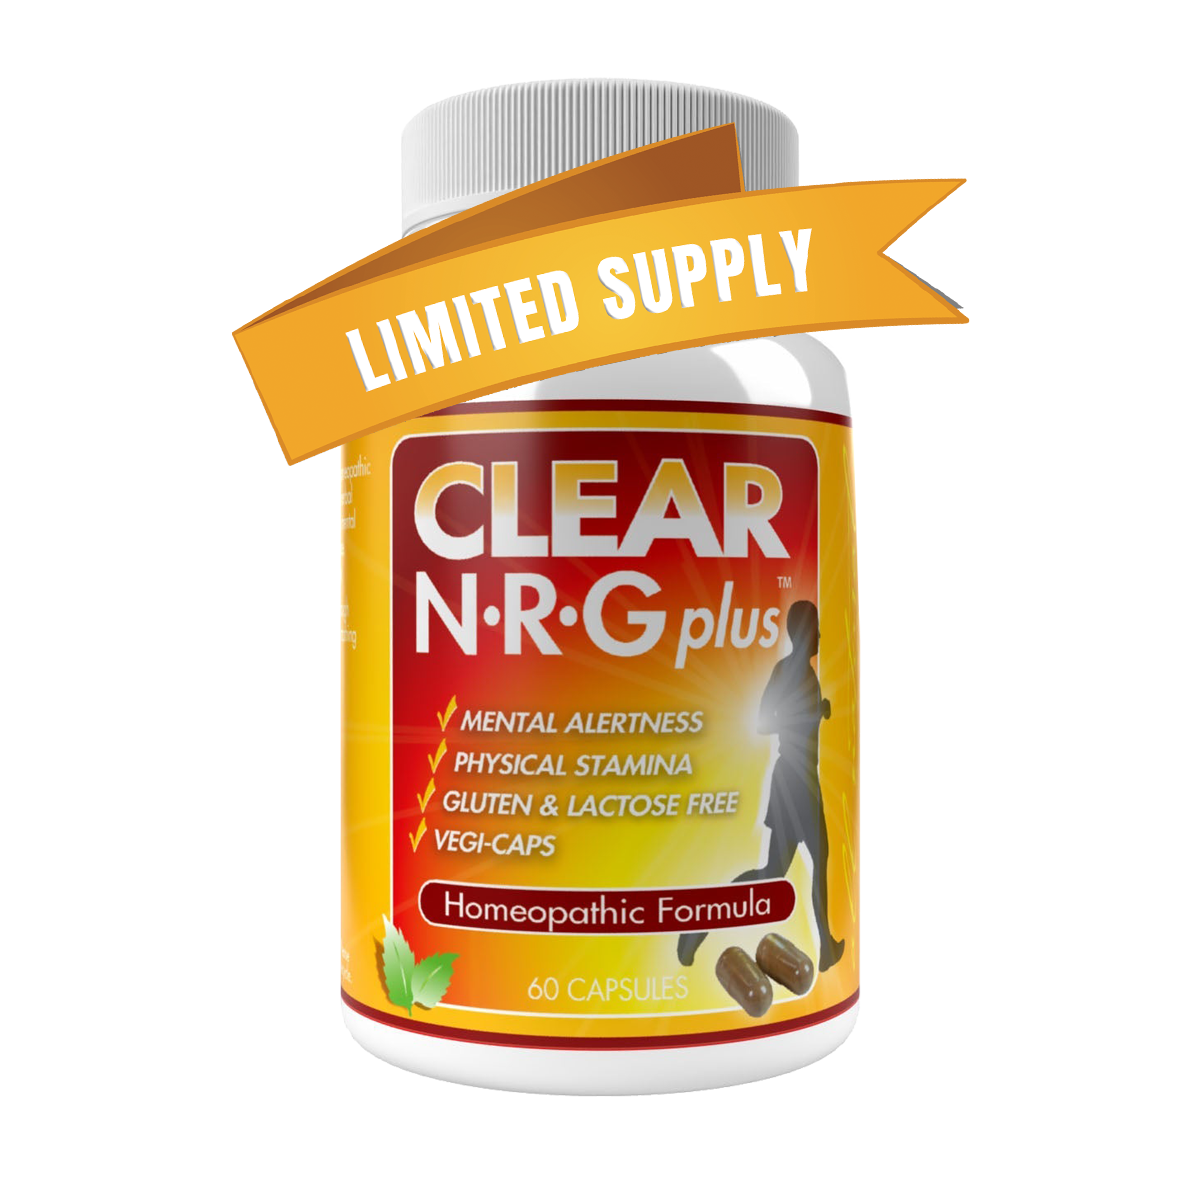 Clear NRG Plus